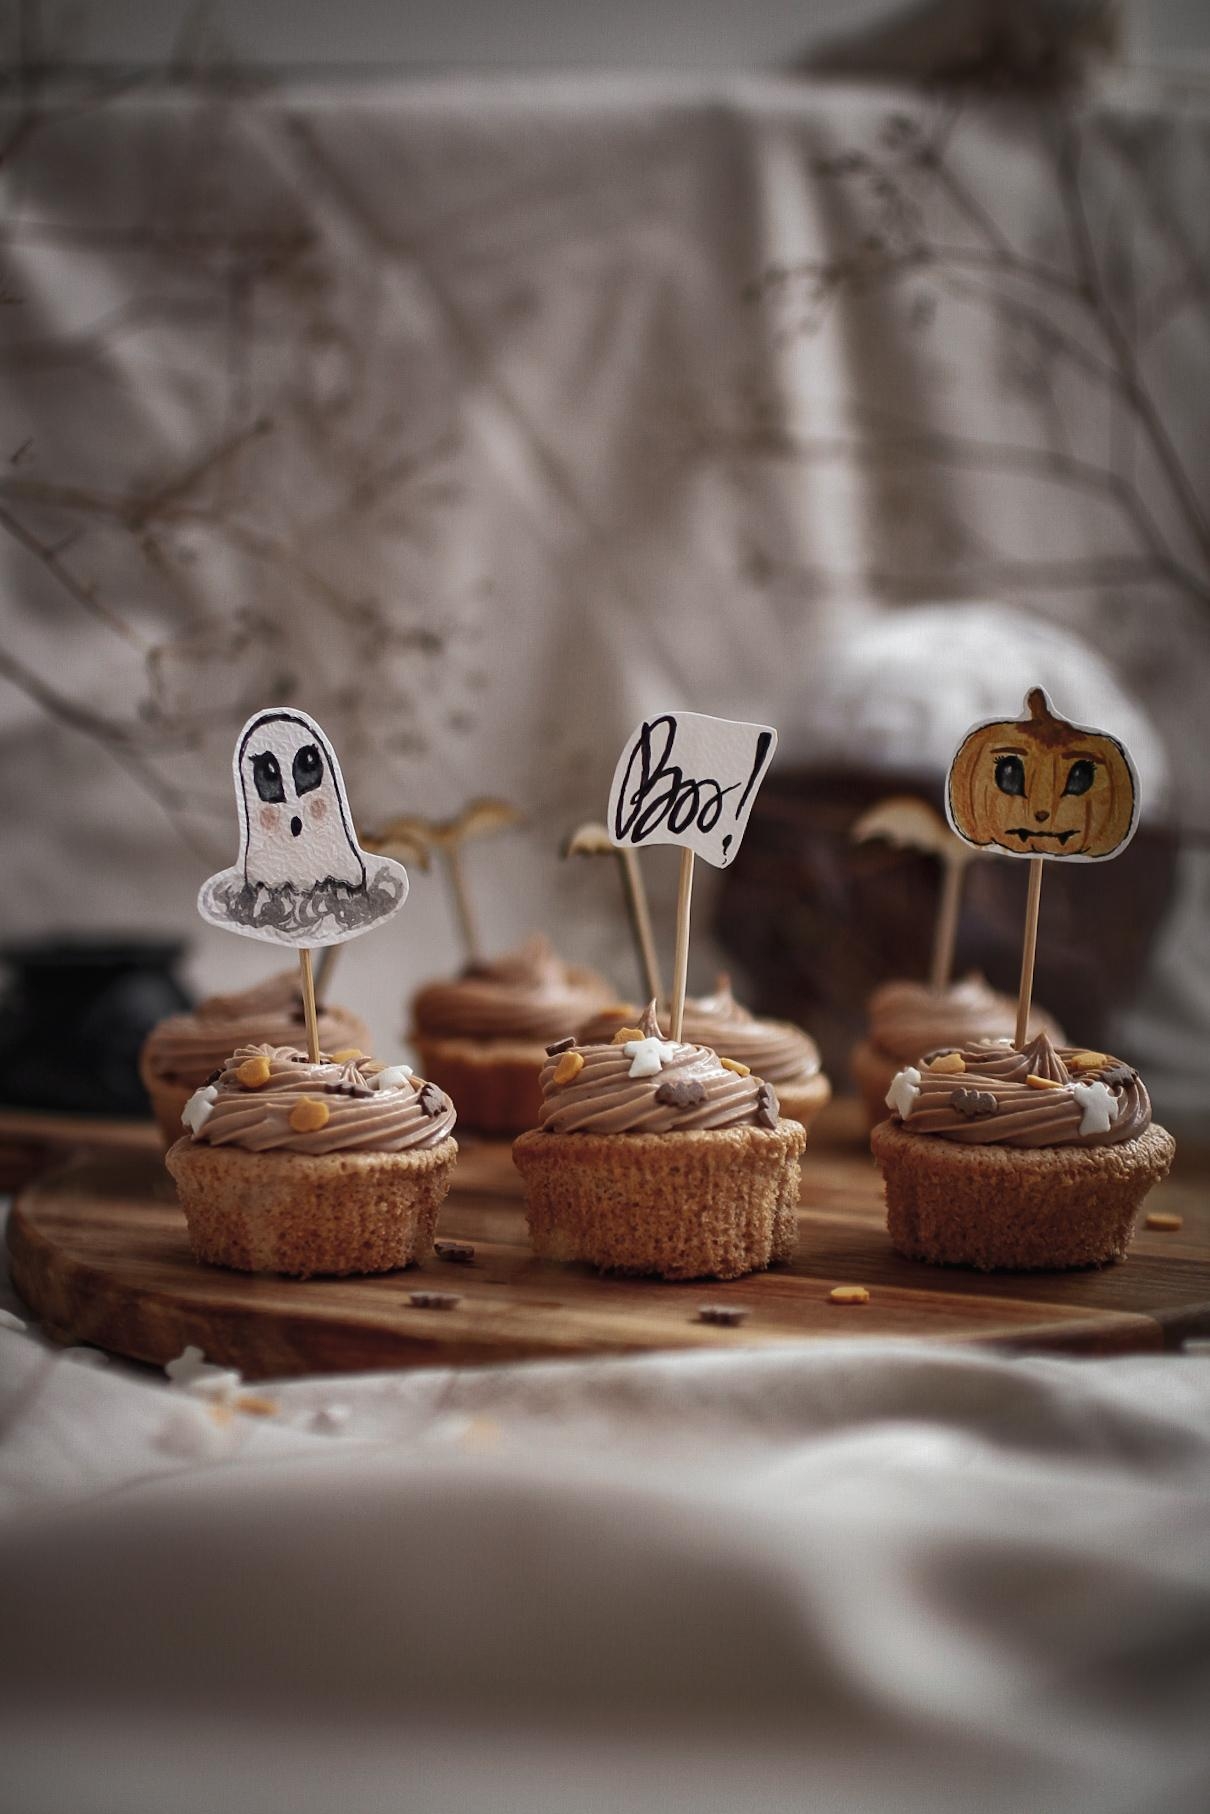 #halloweensnacks #halloweenparty #cupcakes #caketopper #halloween #halloweenideas #ghost #pumpkin #watercolor #boo